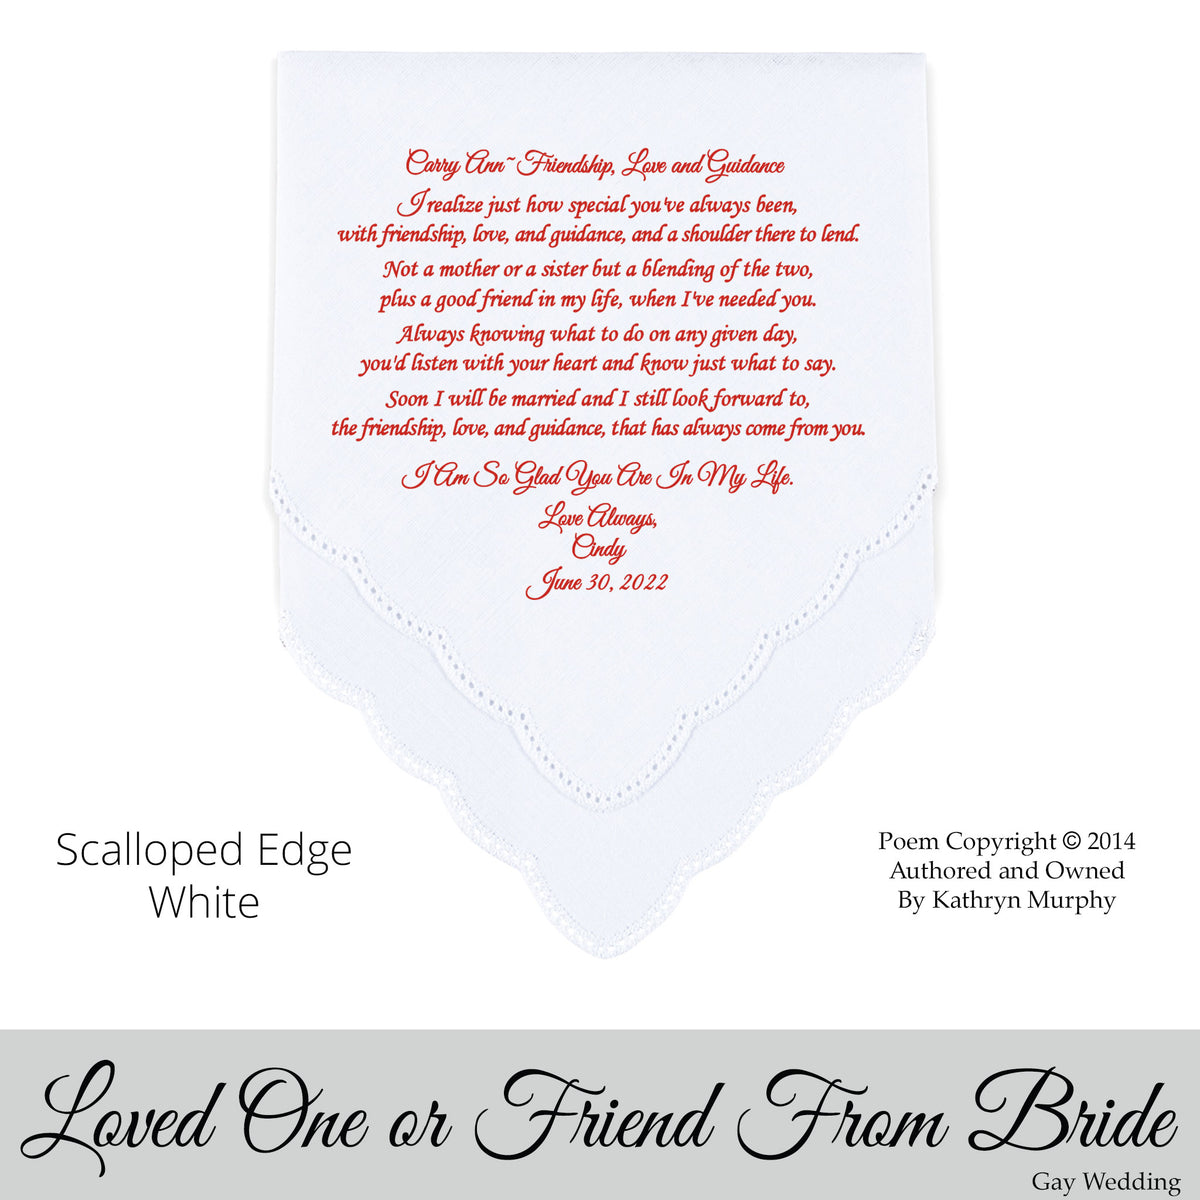 Gay Wedding Gift for a Loved one or Friend poem printed wedding hankie